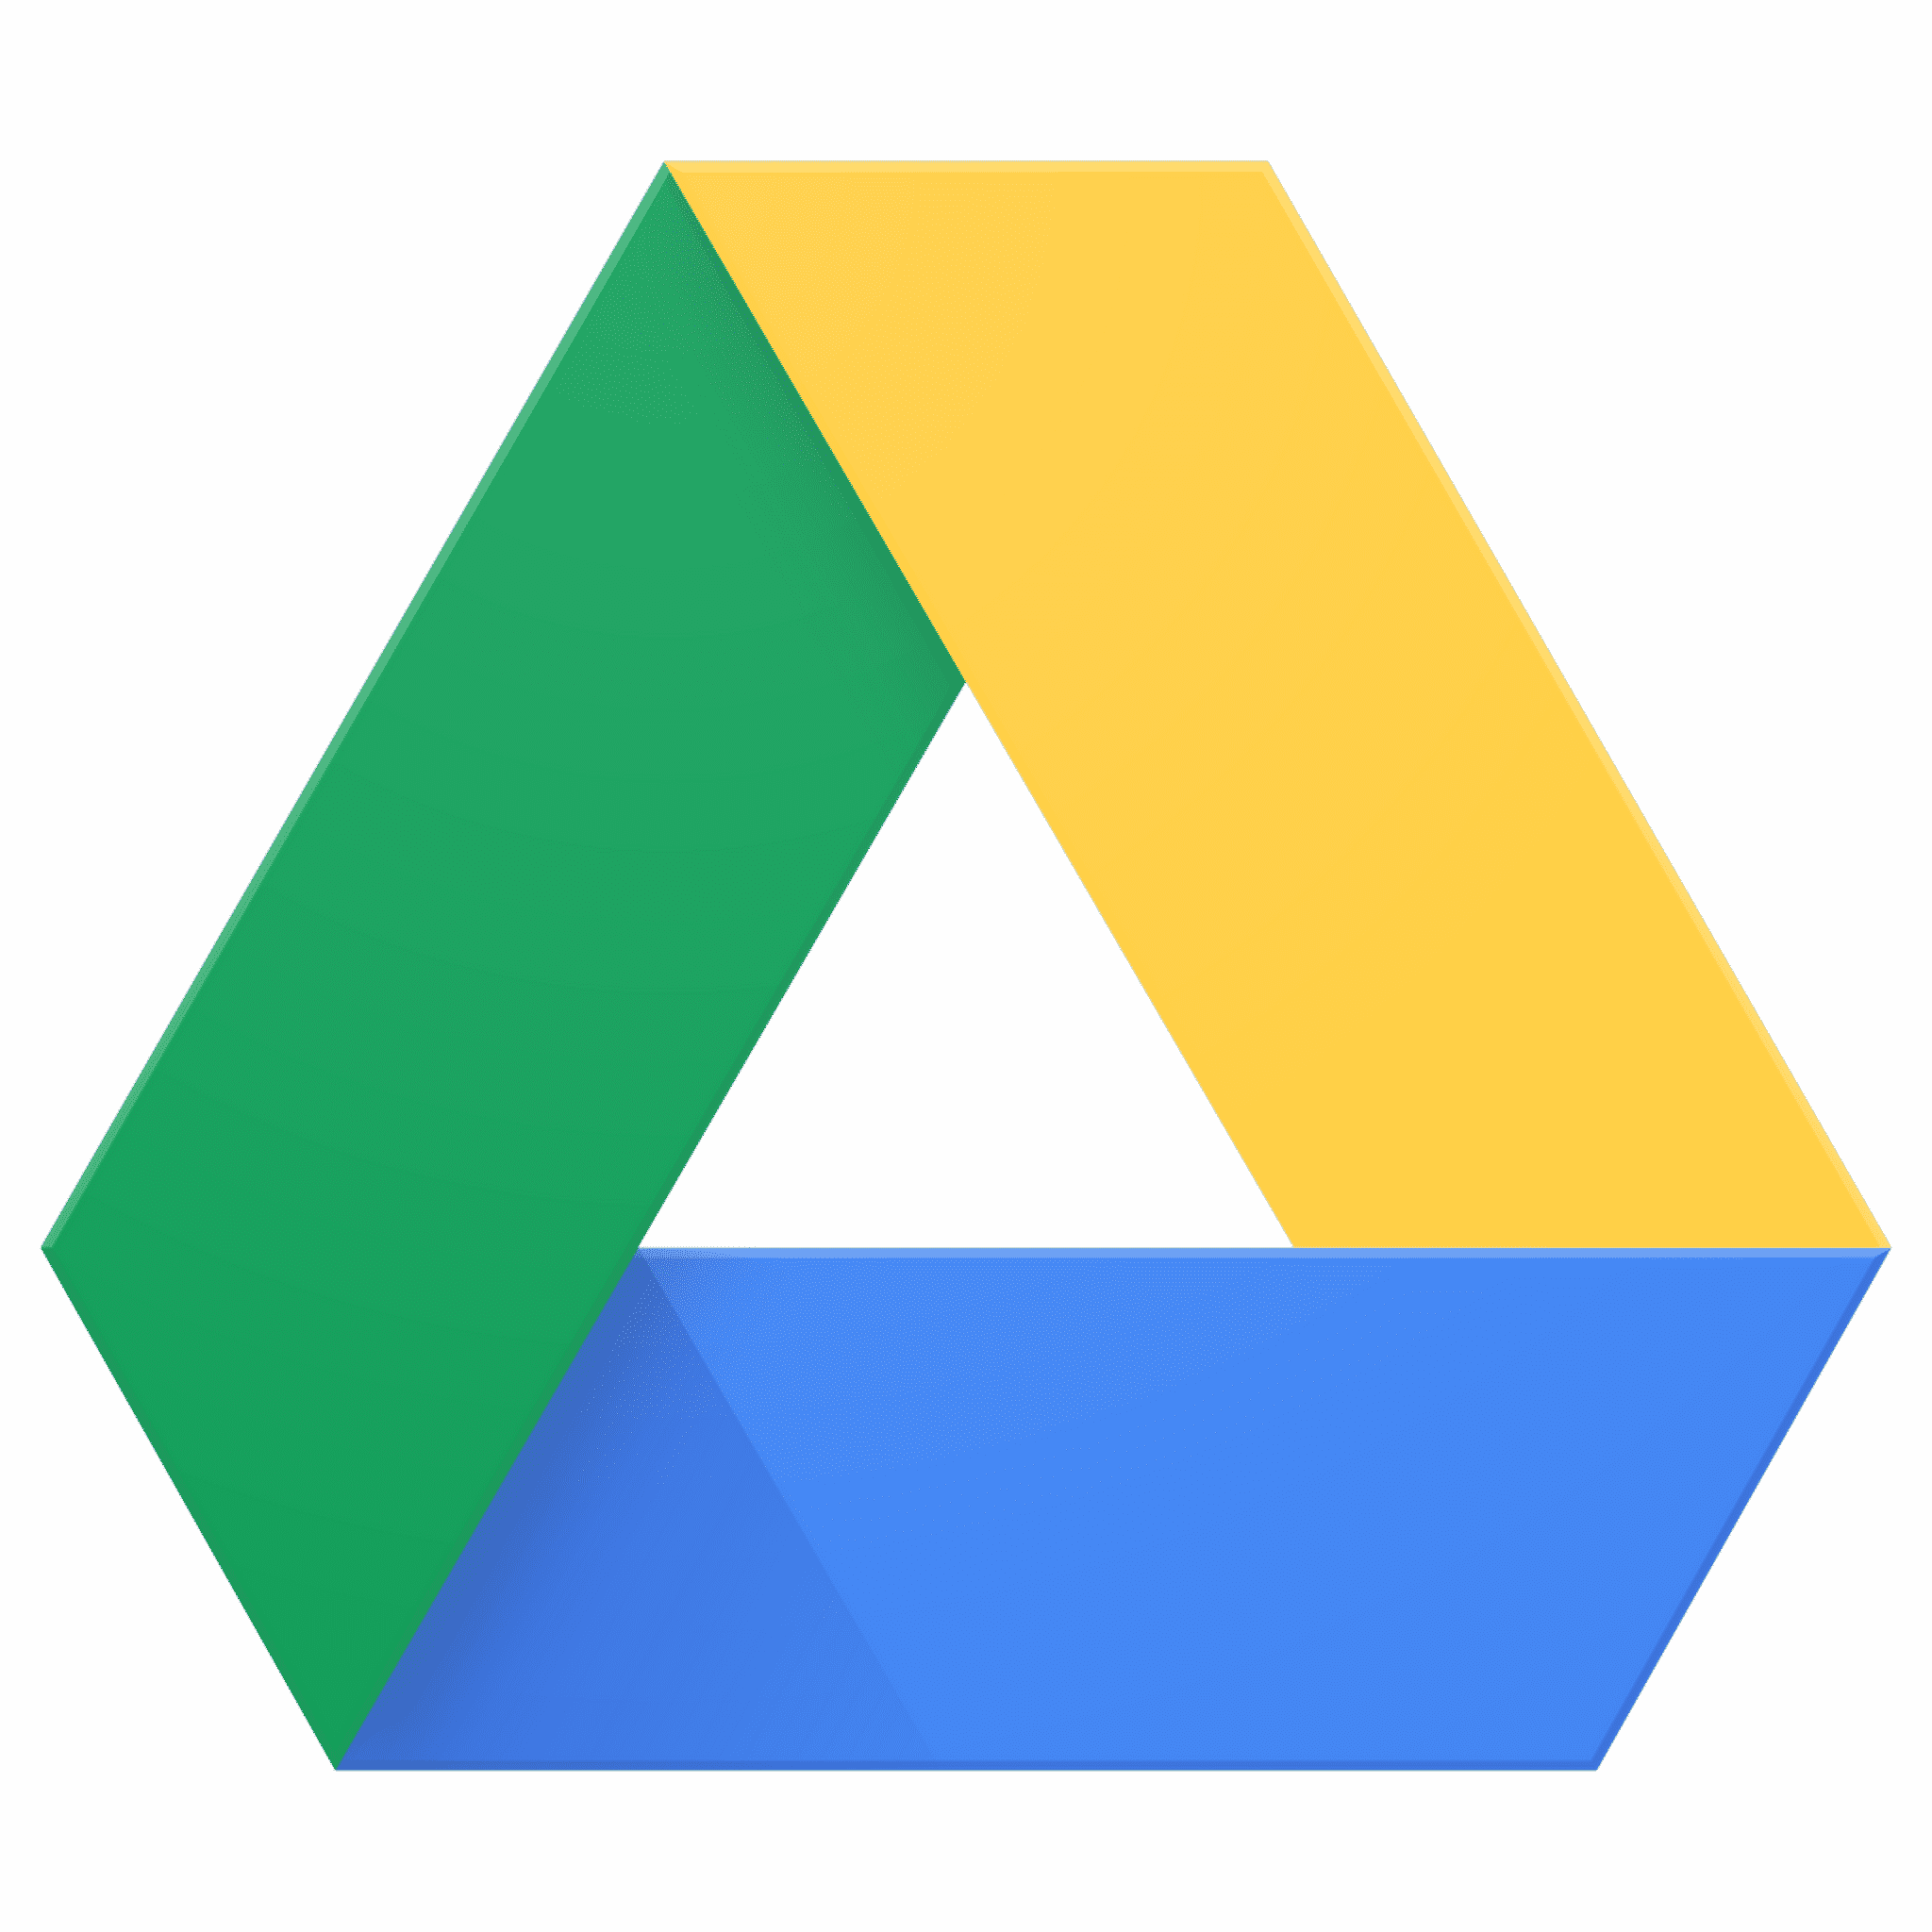 google drive logo png